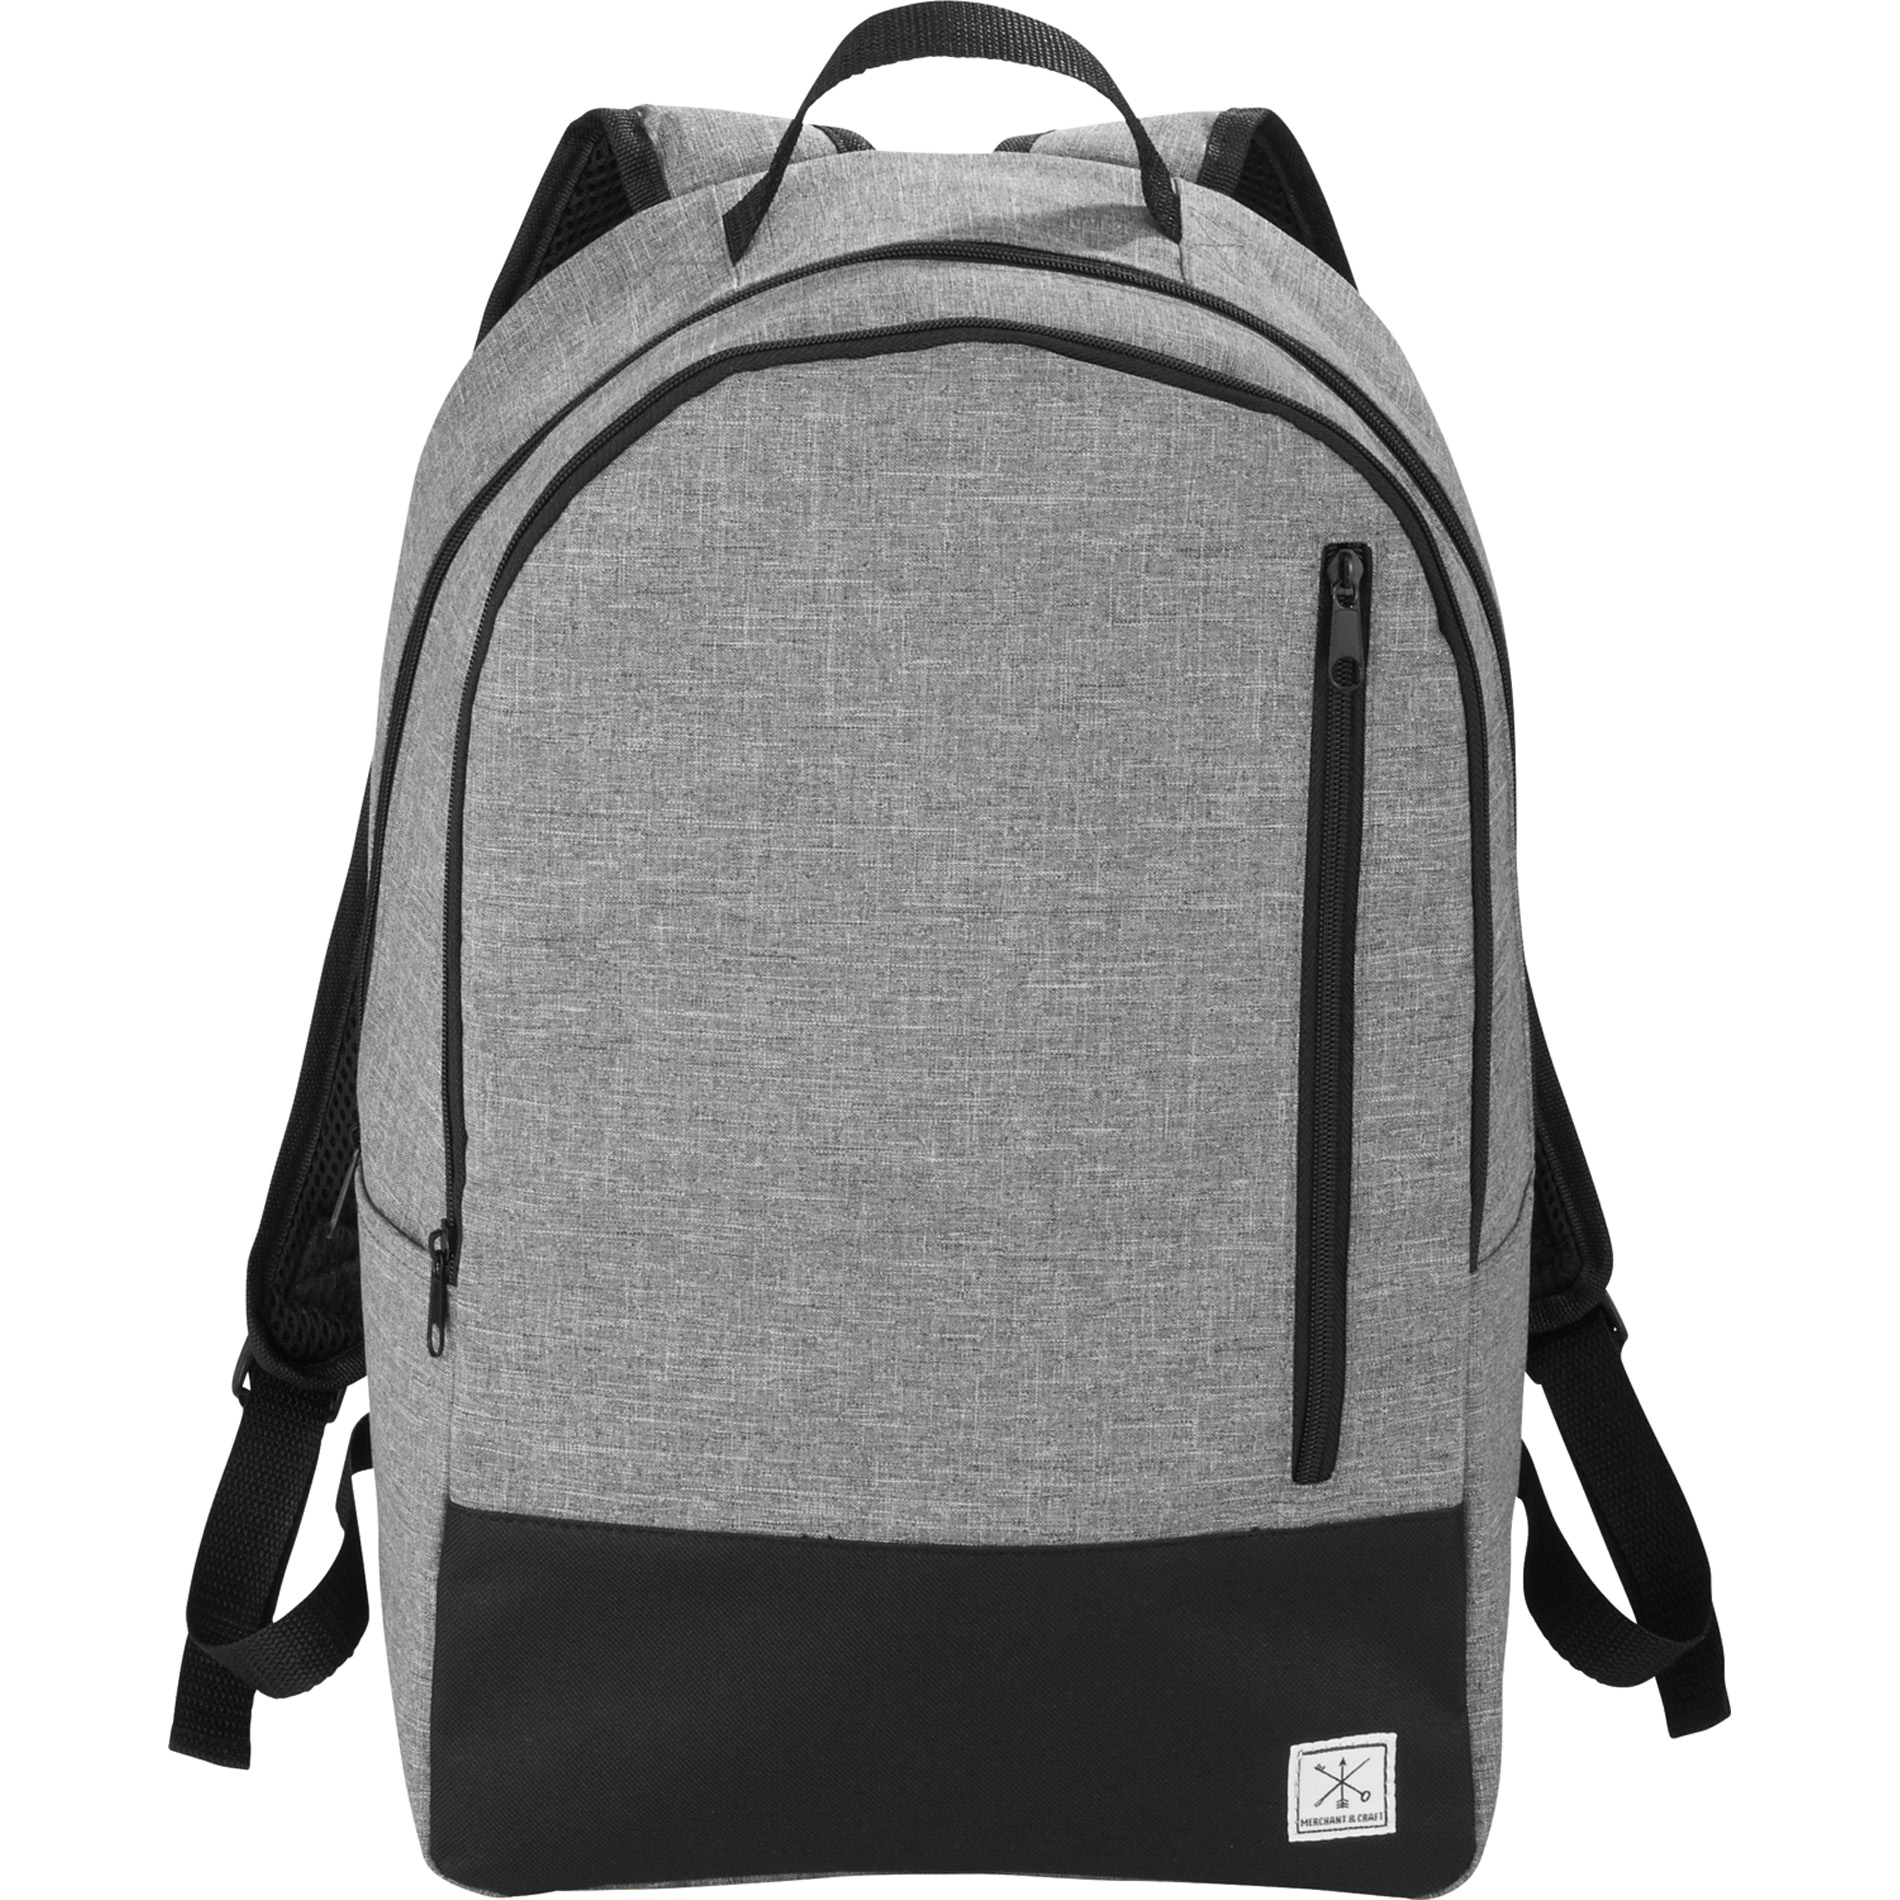 Merchant & Craft 3750-16 - Grayley 15 Computer Backpack $13.89 - Bags